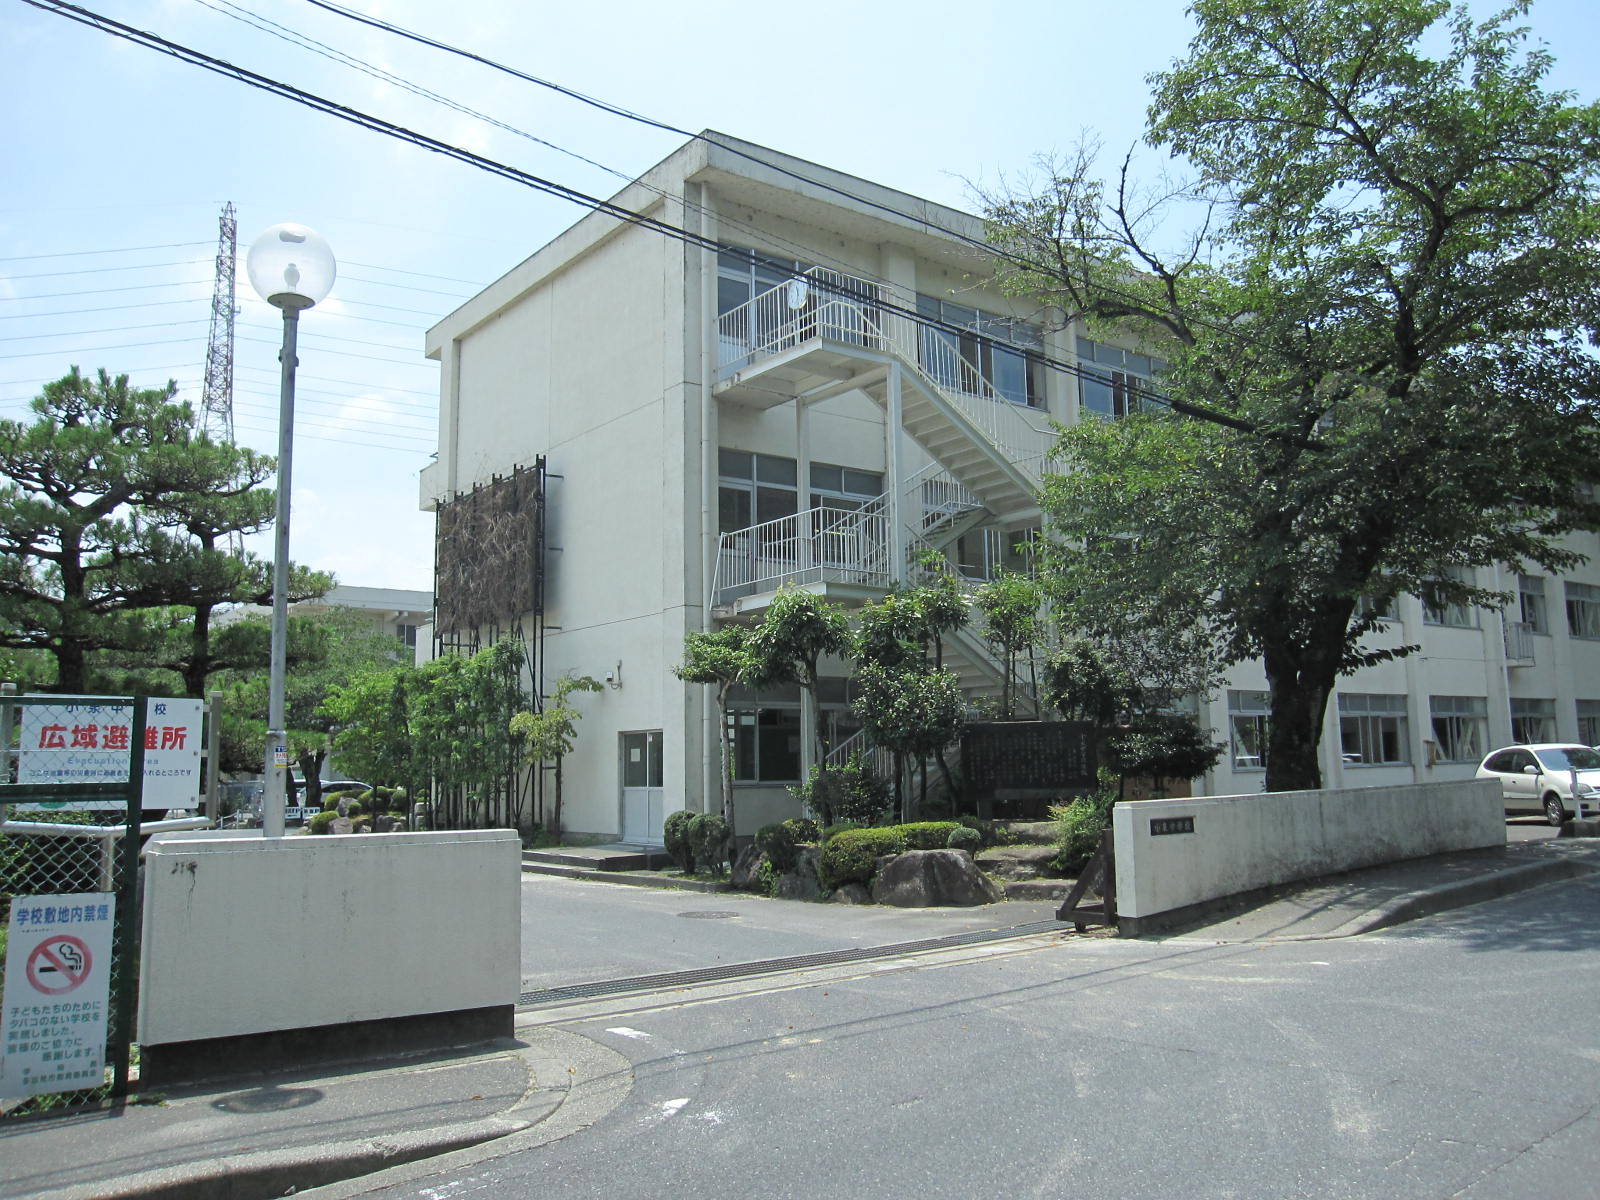 Primary school. Tajimi until municipal Koizumi elementary school (elementary school) 485m